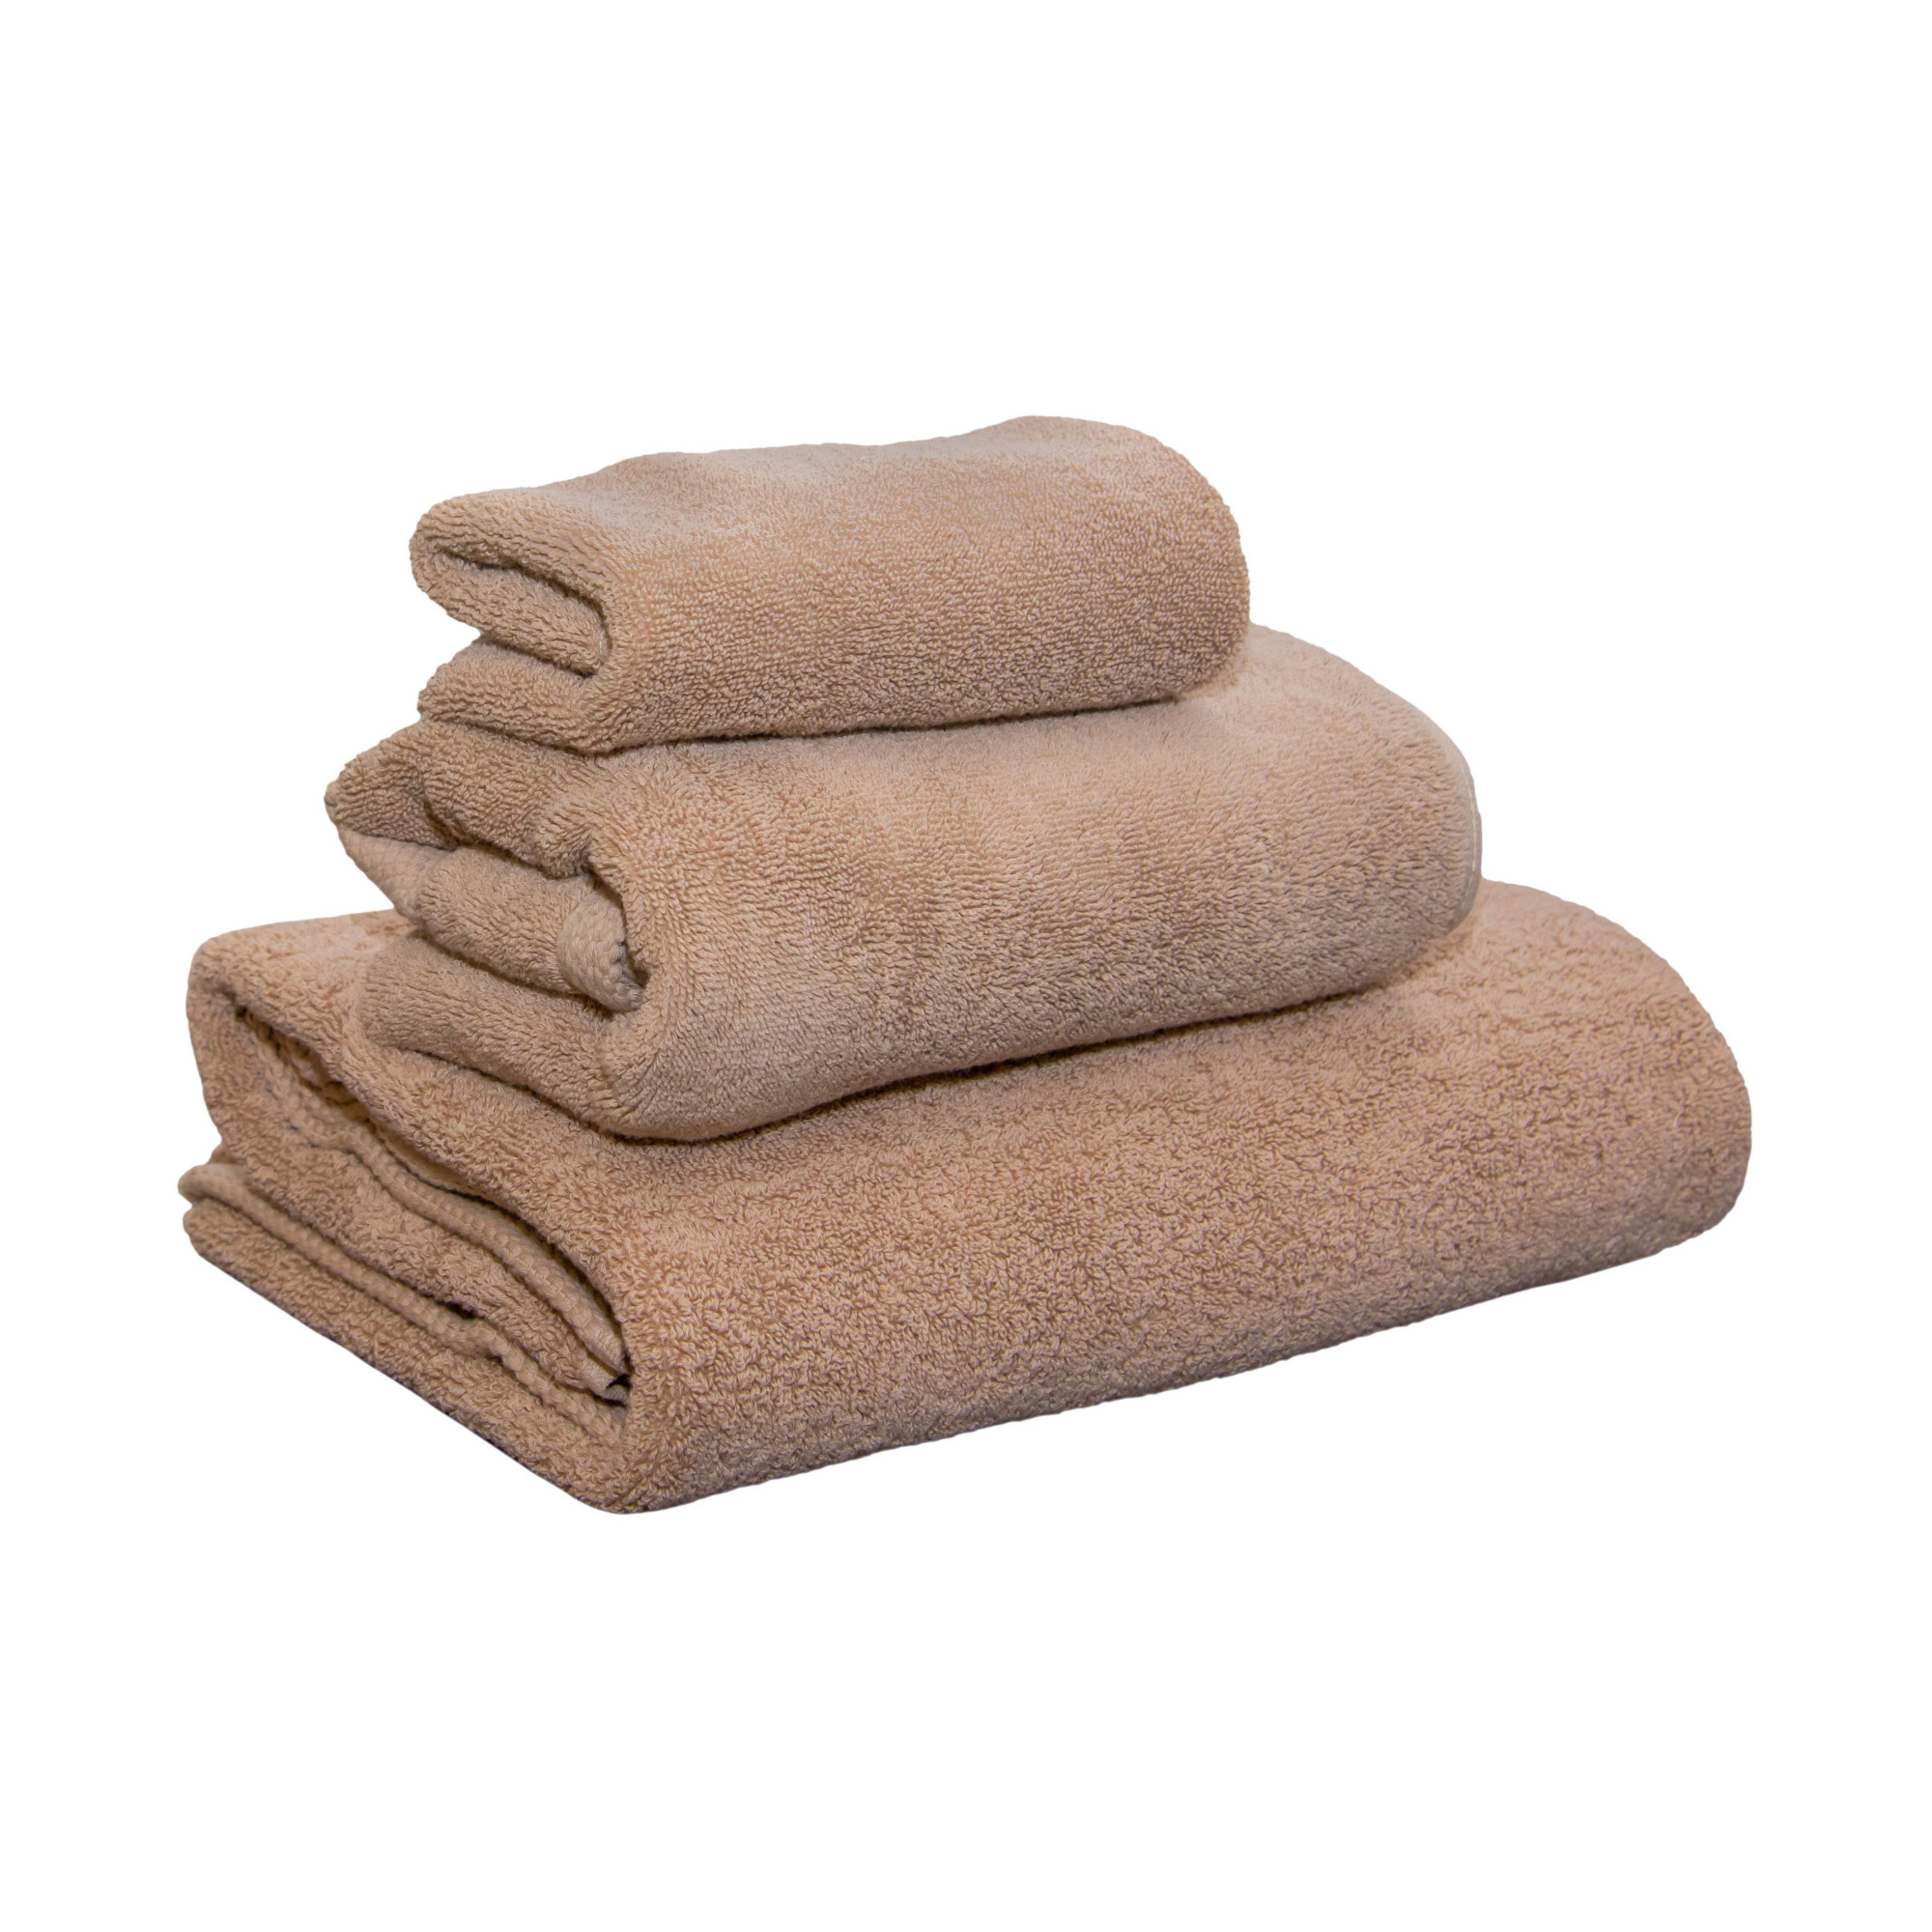 Terry towel 30x50, cuban sand, 100% cotton